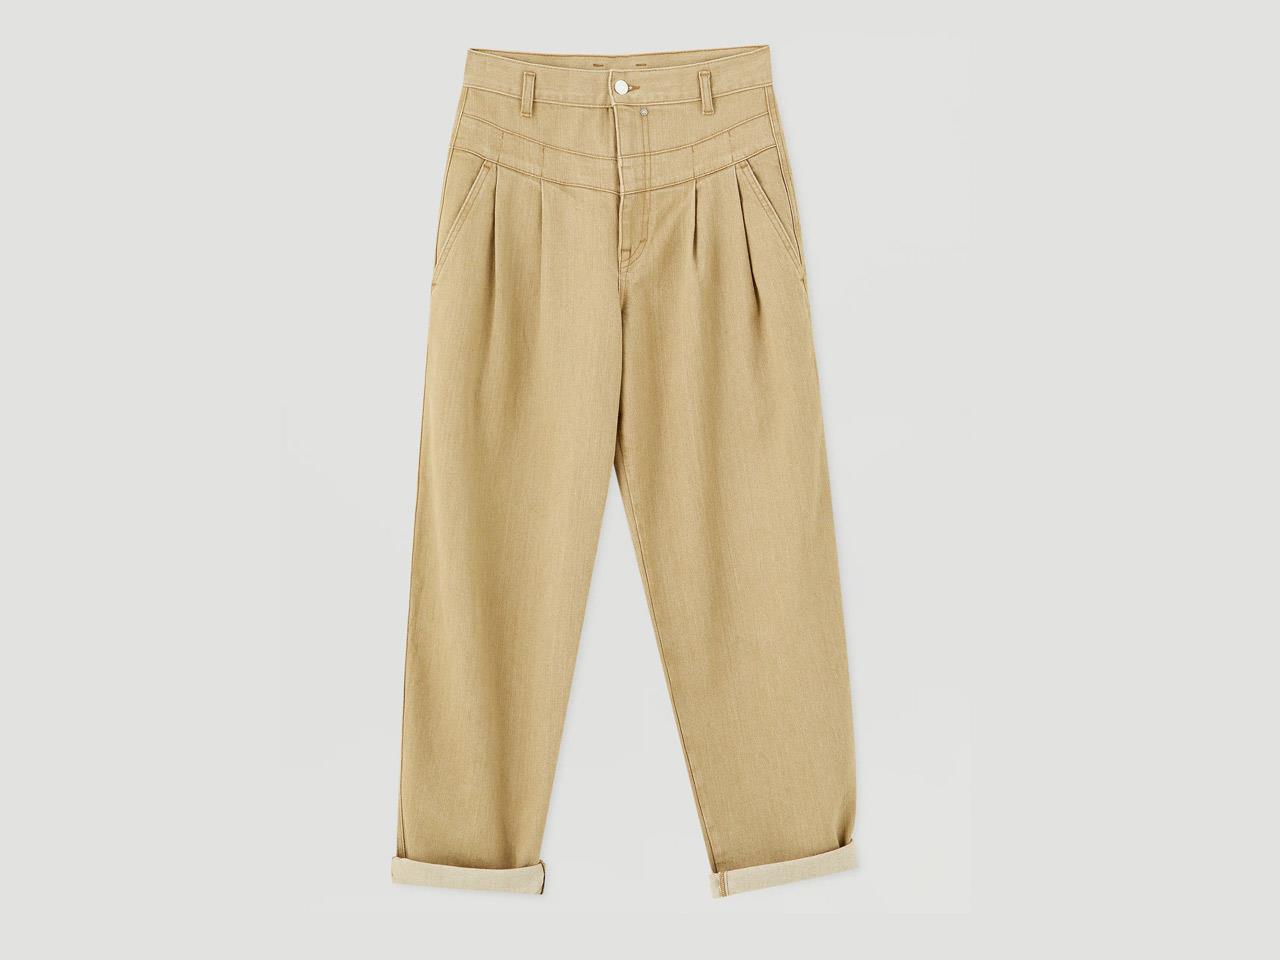 slouchy jeans pantalones de moda pull&bear Pull&Bear, 29,99€